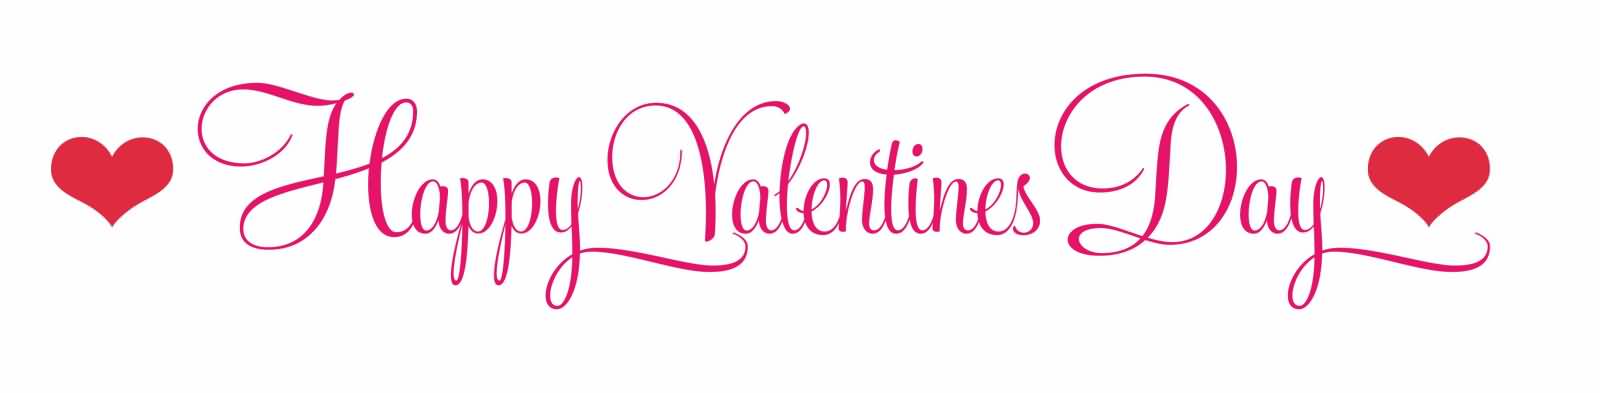 Happy Valentine's Day Banner Image